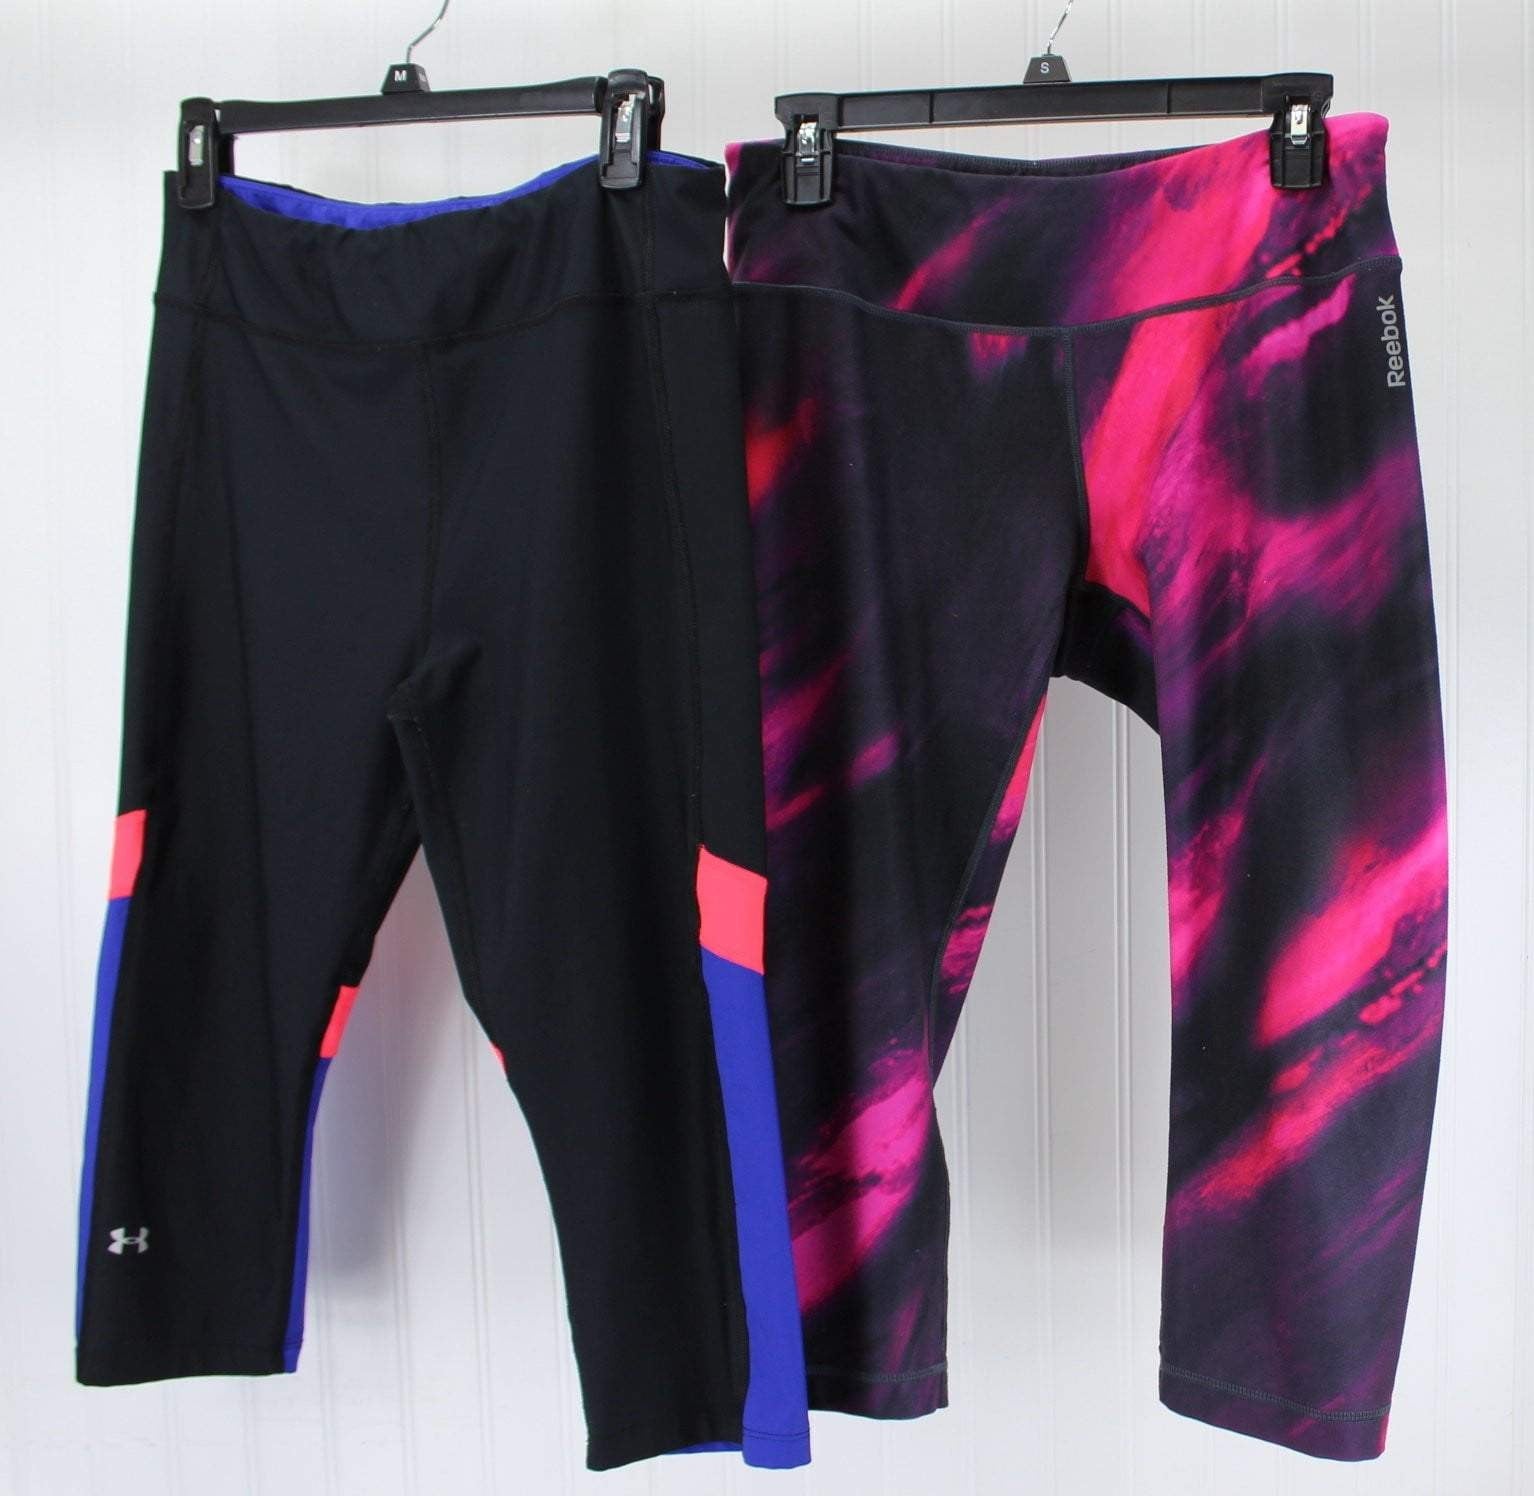 Reebok Under Armour 2 Pair Yoga Activewear Pants Capri Length Large bright colors good condition